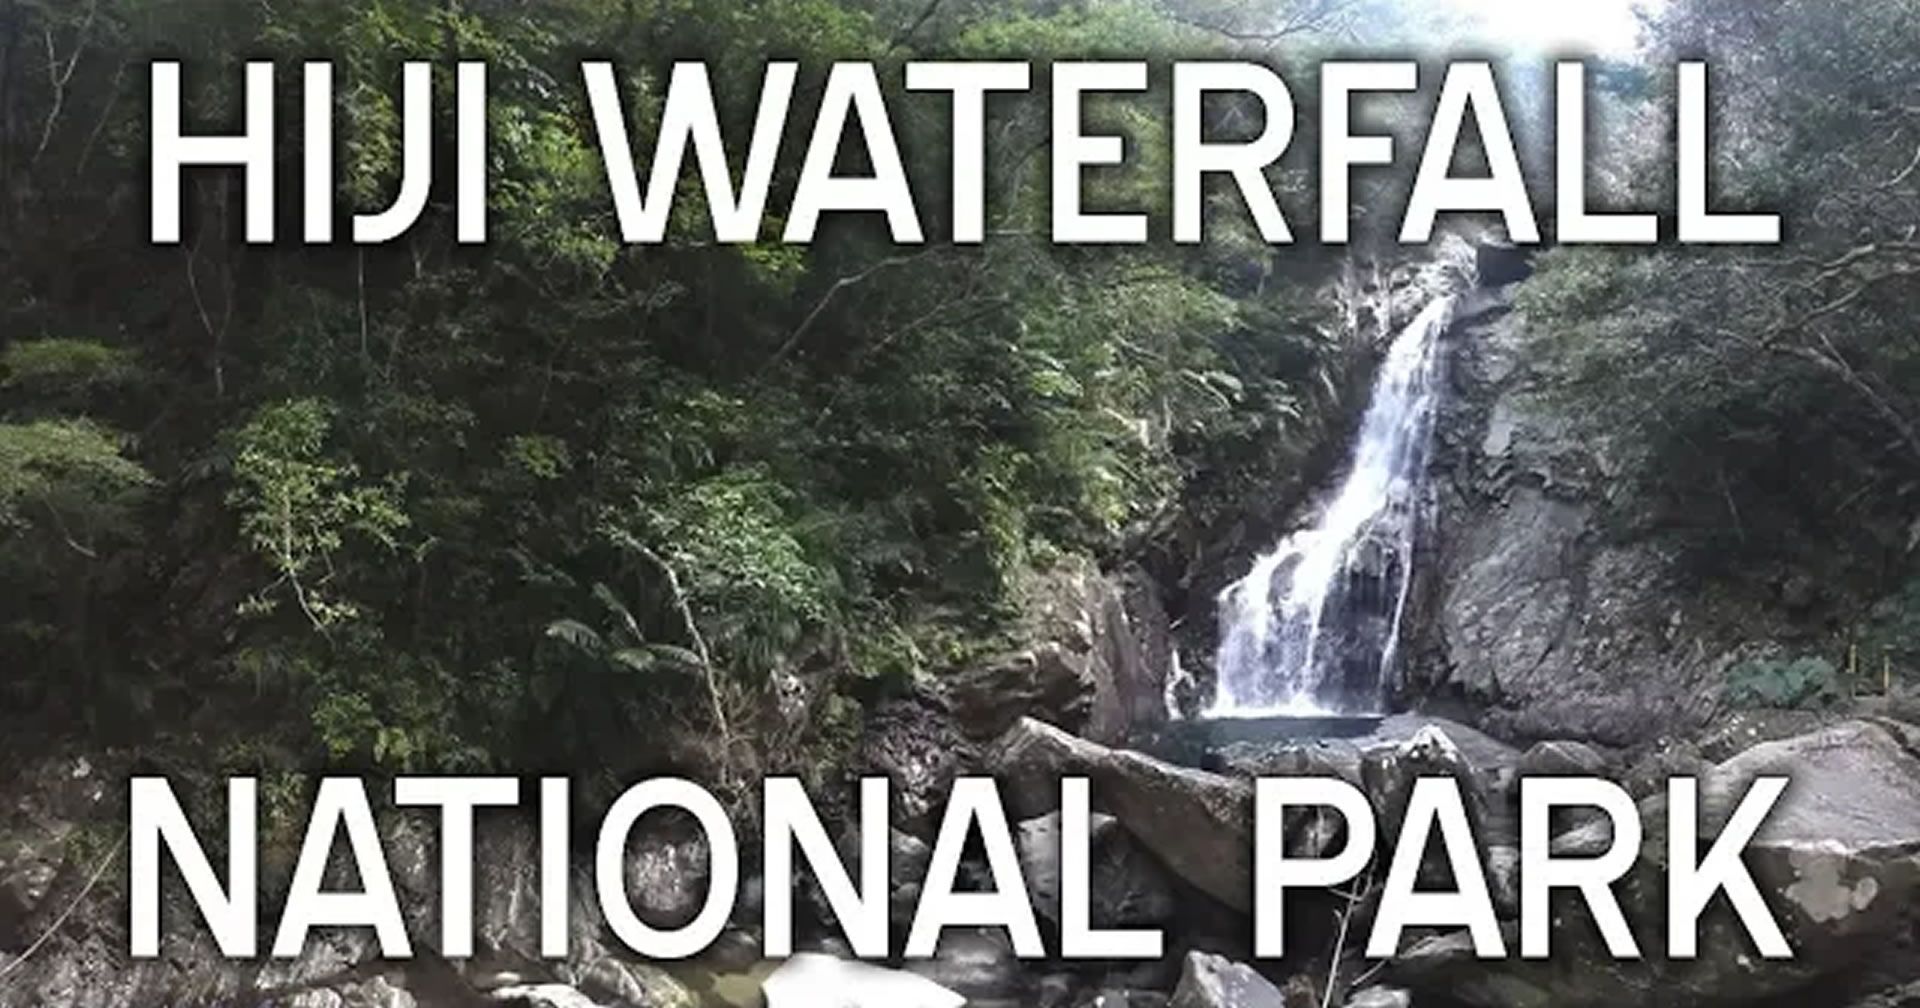 Hiji Waterfall National Park